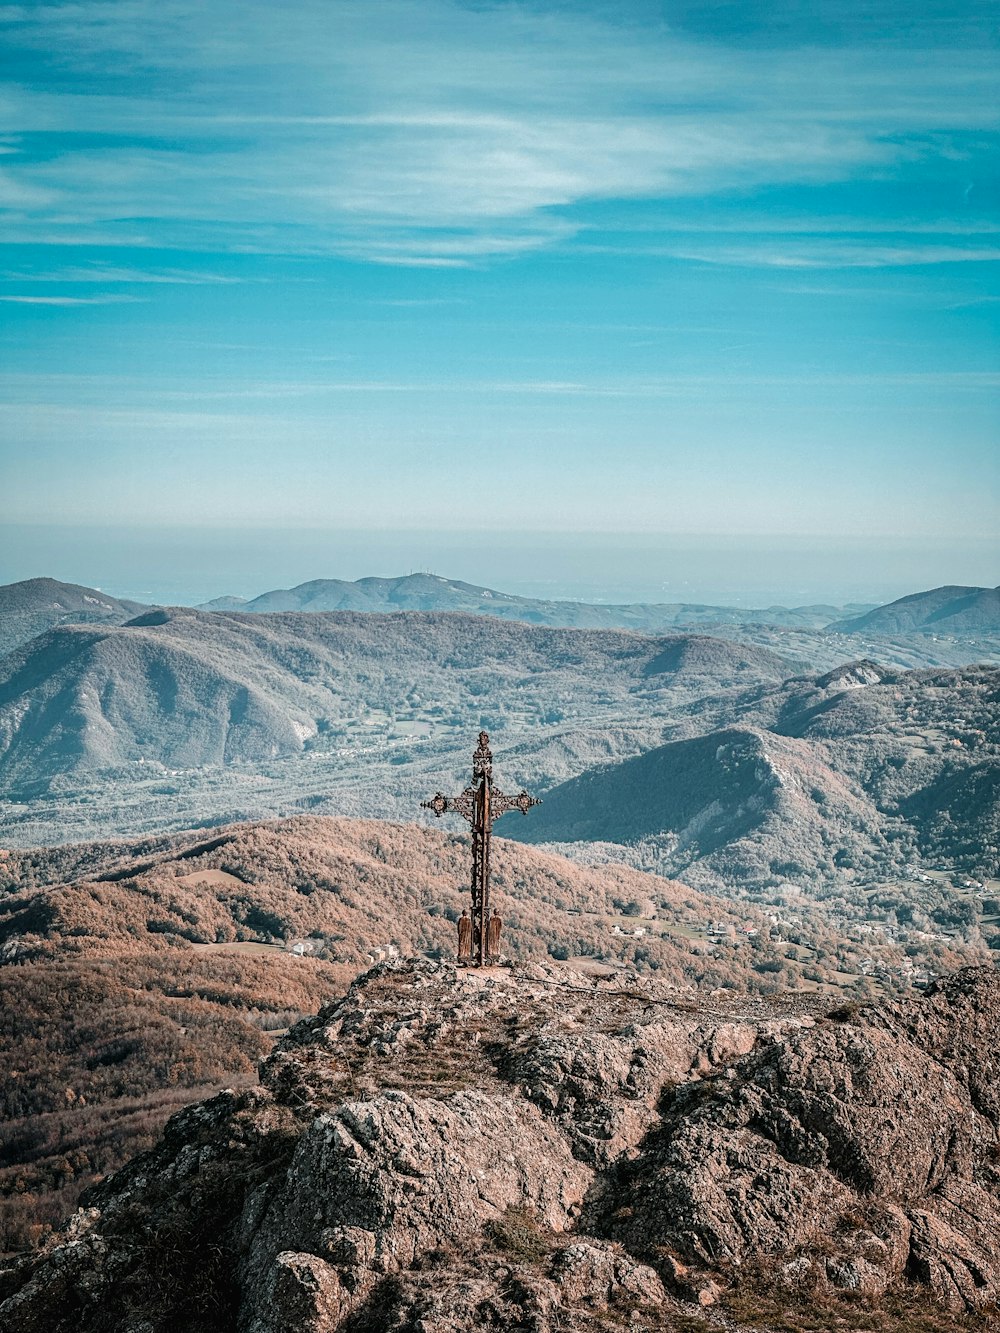 a cross on a mountain